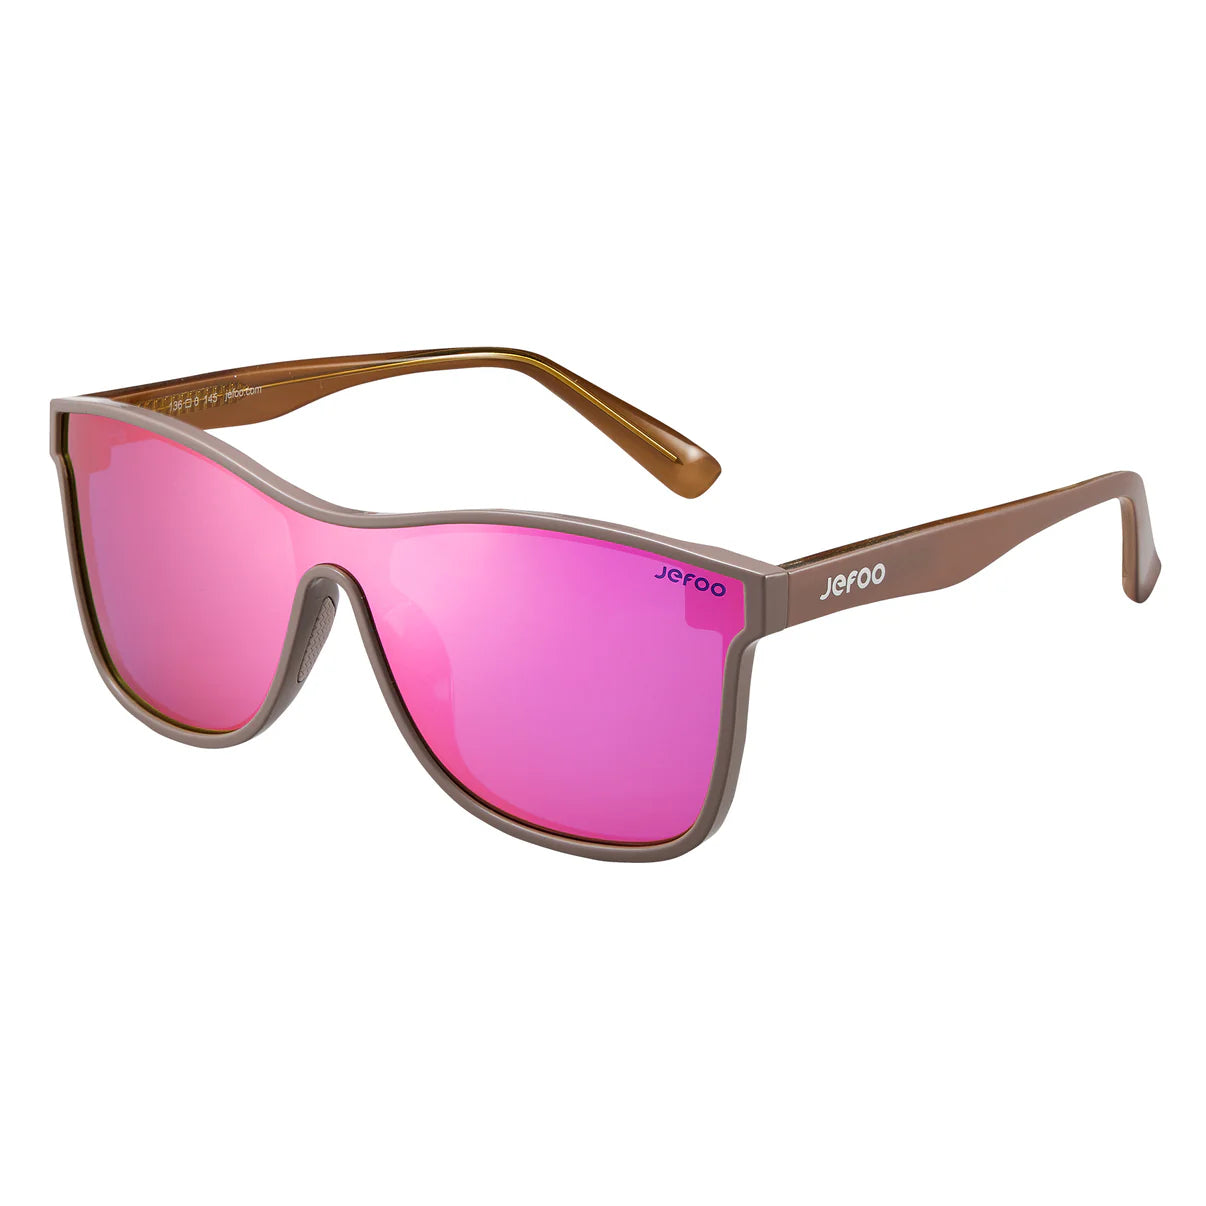 JEFOO-Cute-One-Lens-Sunglasses-Aurora-Pink